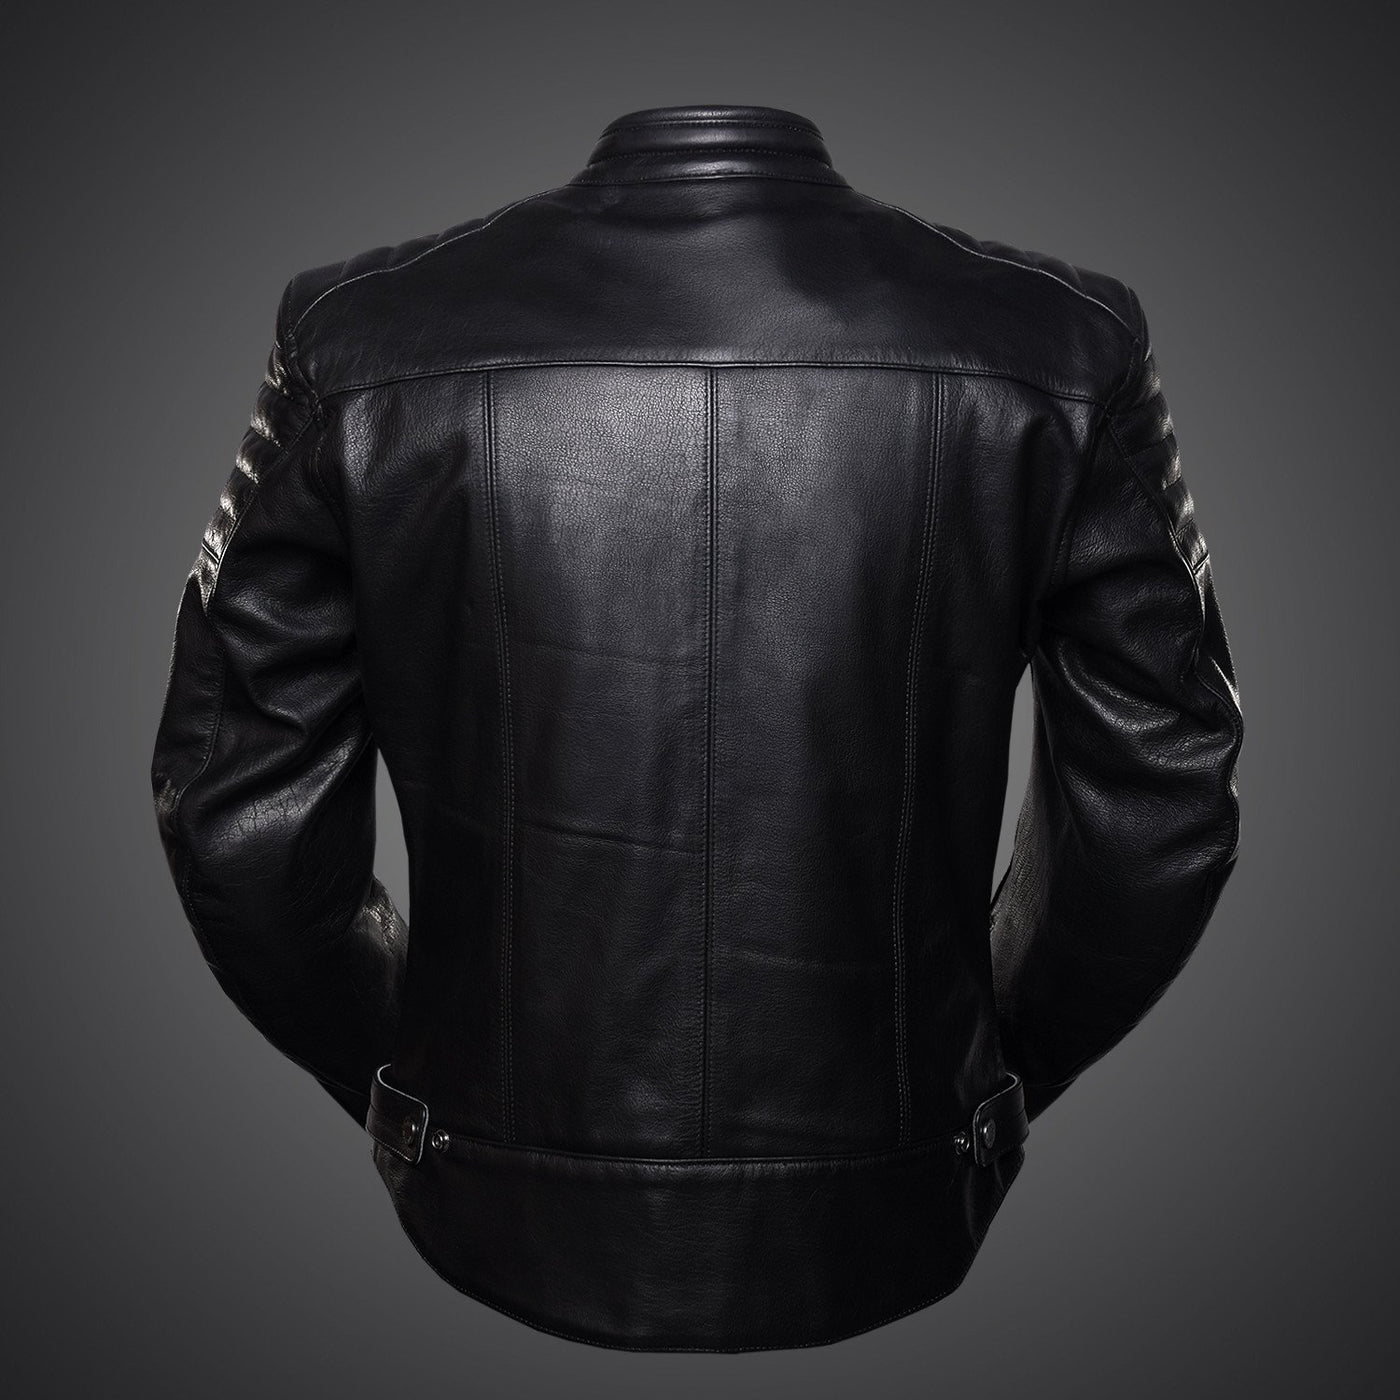 Motorcycle jacket - B Monster